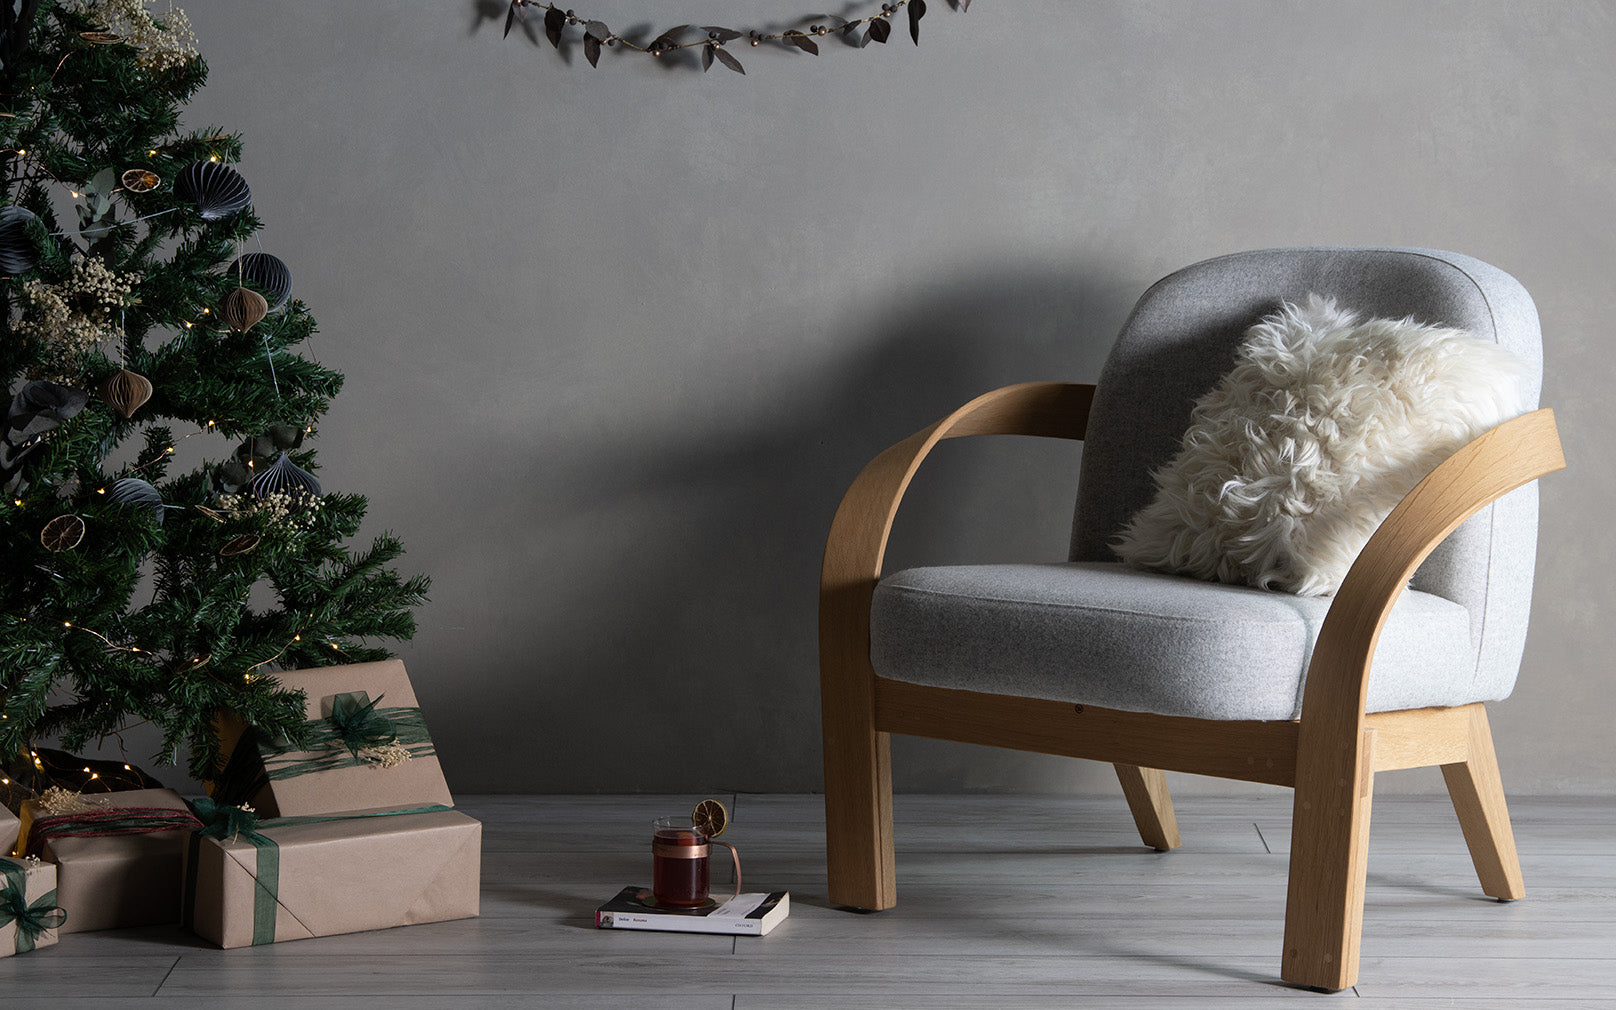 Arbor Armchair and Sheepskin cushion in christmas setting